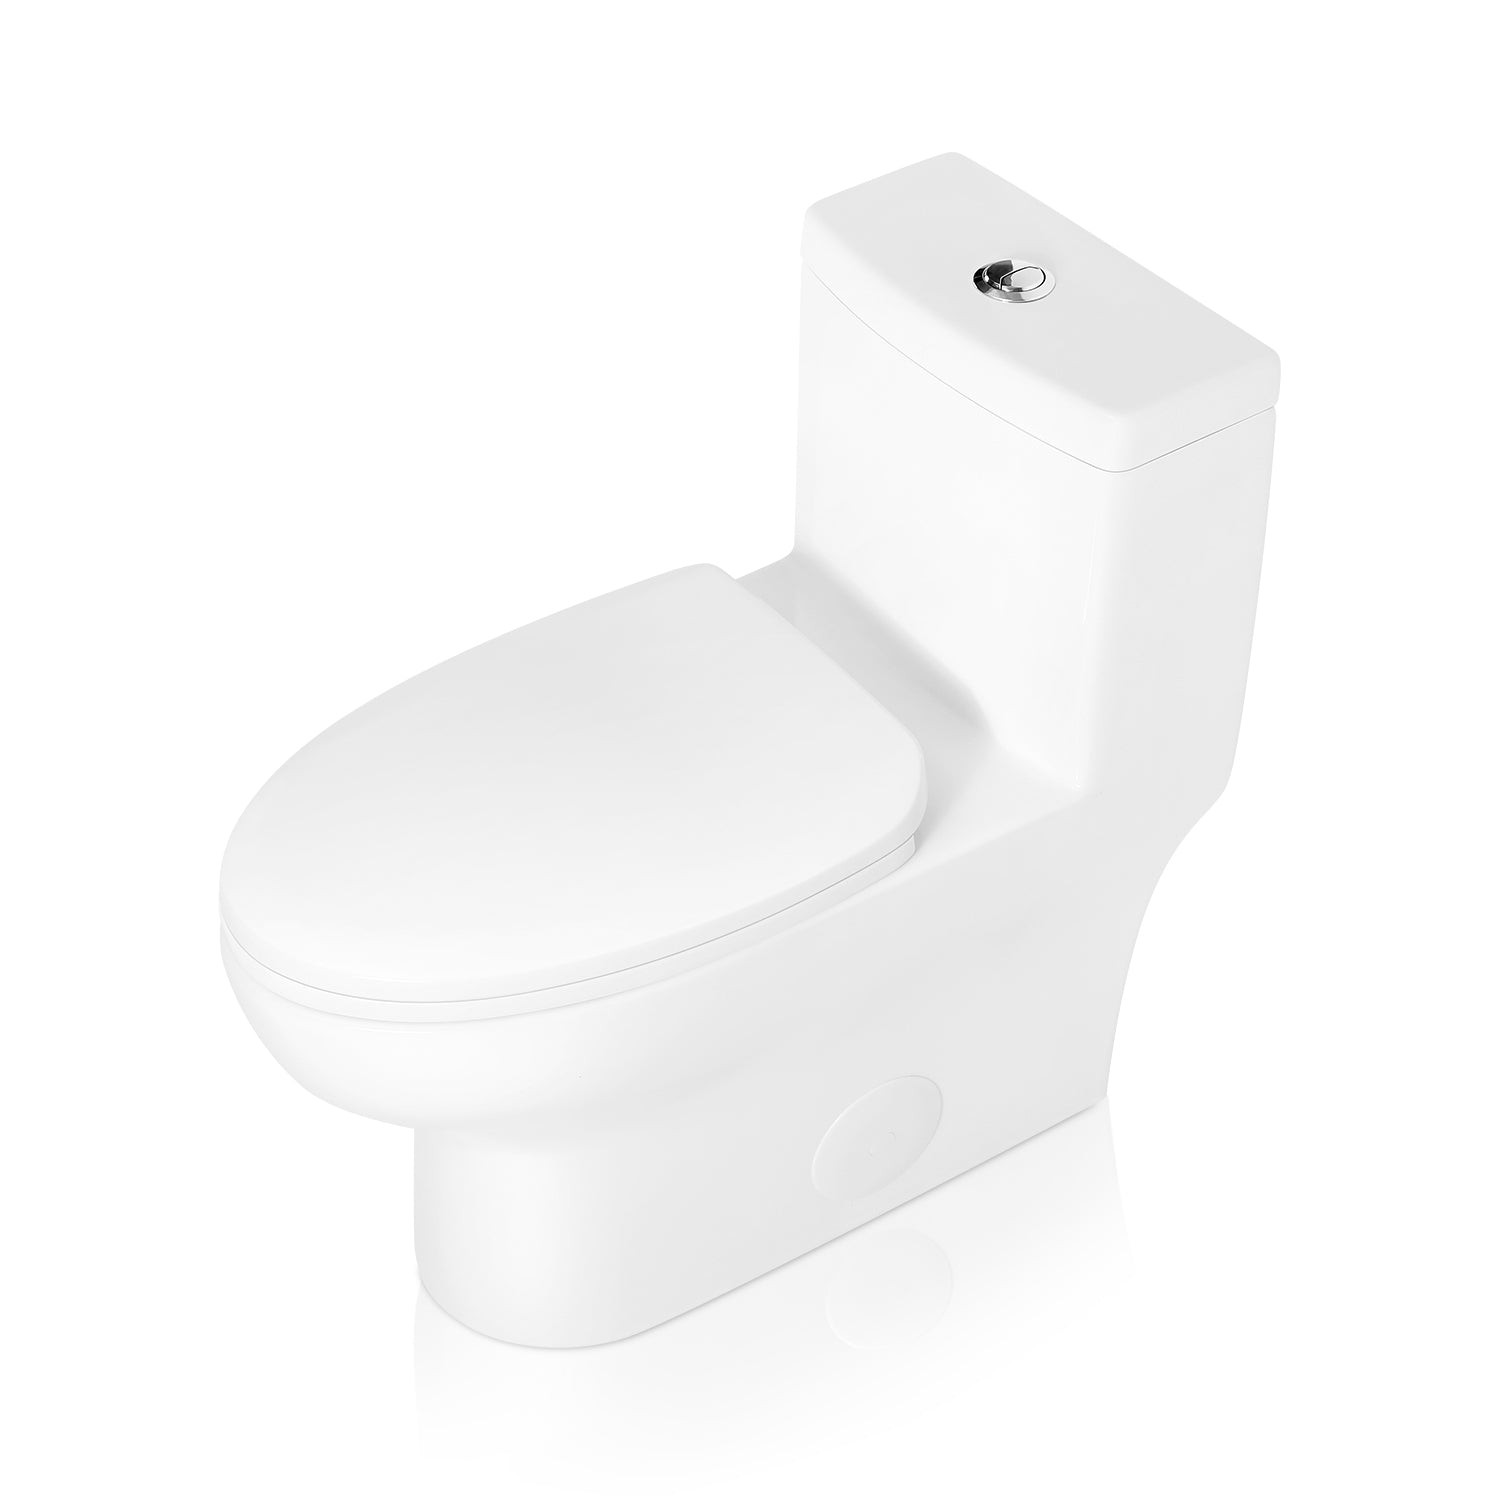 Sinber Cotton White One Piece Modern Design Bathroom Toilet With Dual Flush (Style 1)